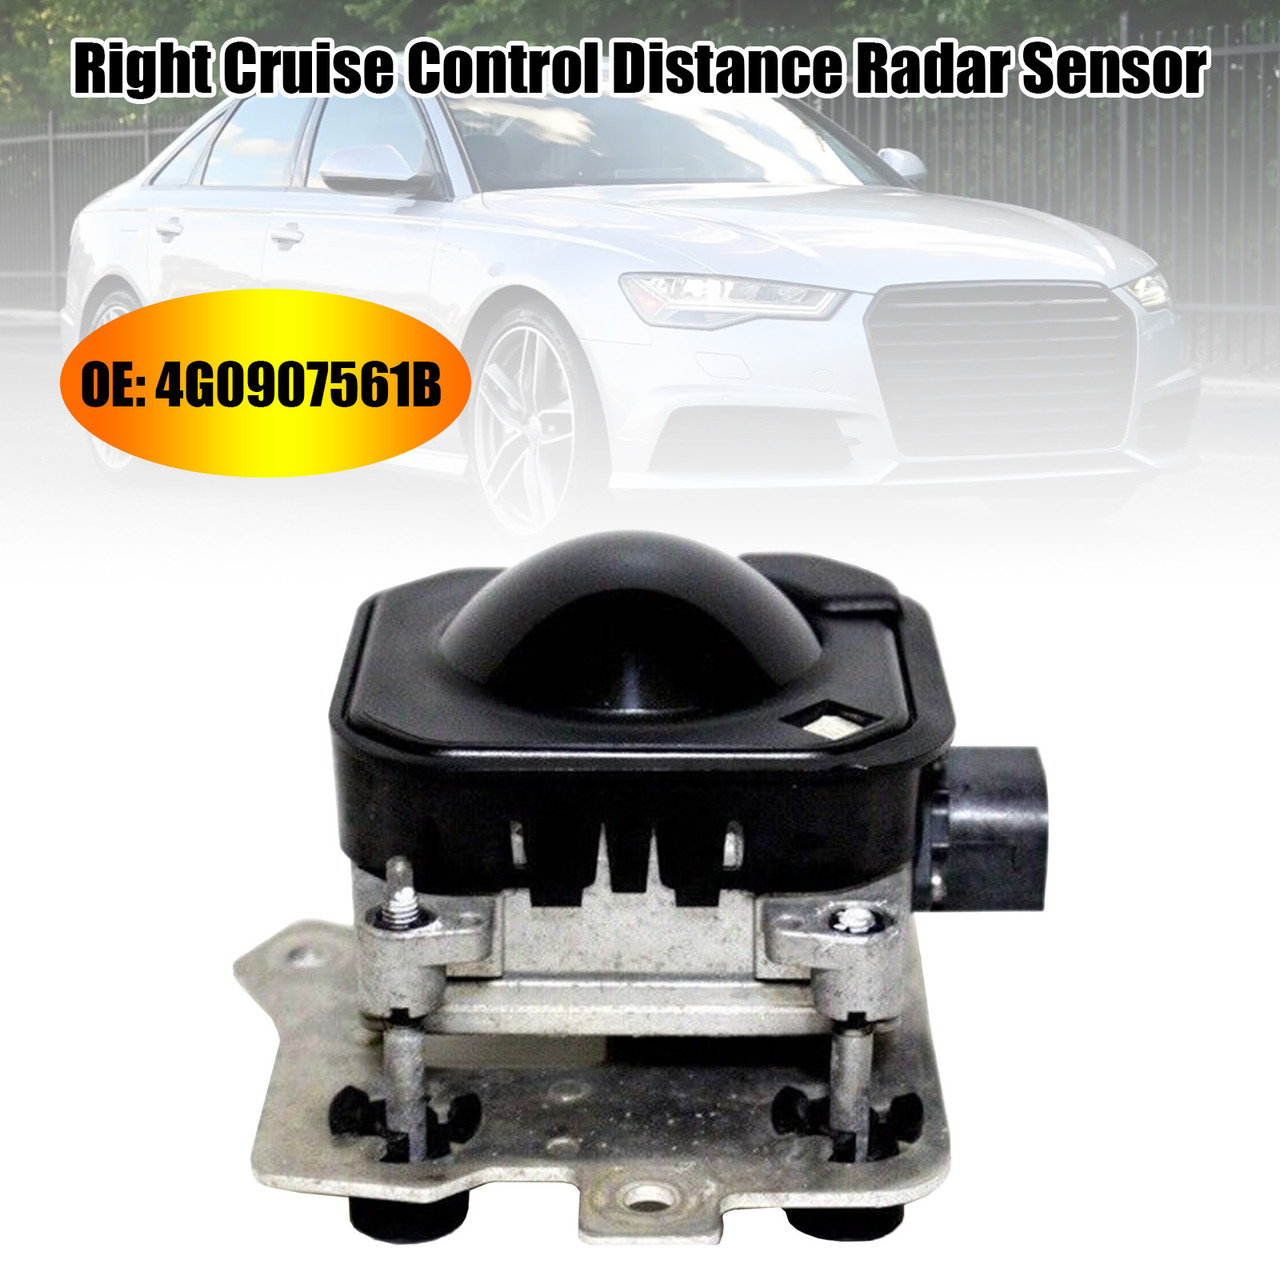 Right Cruise Control Distance Radar Sensor 4G0907561B For Audi A6 A7 2016-2018